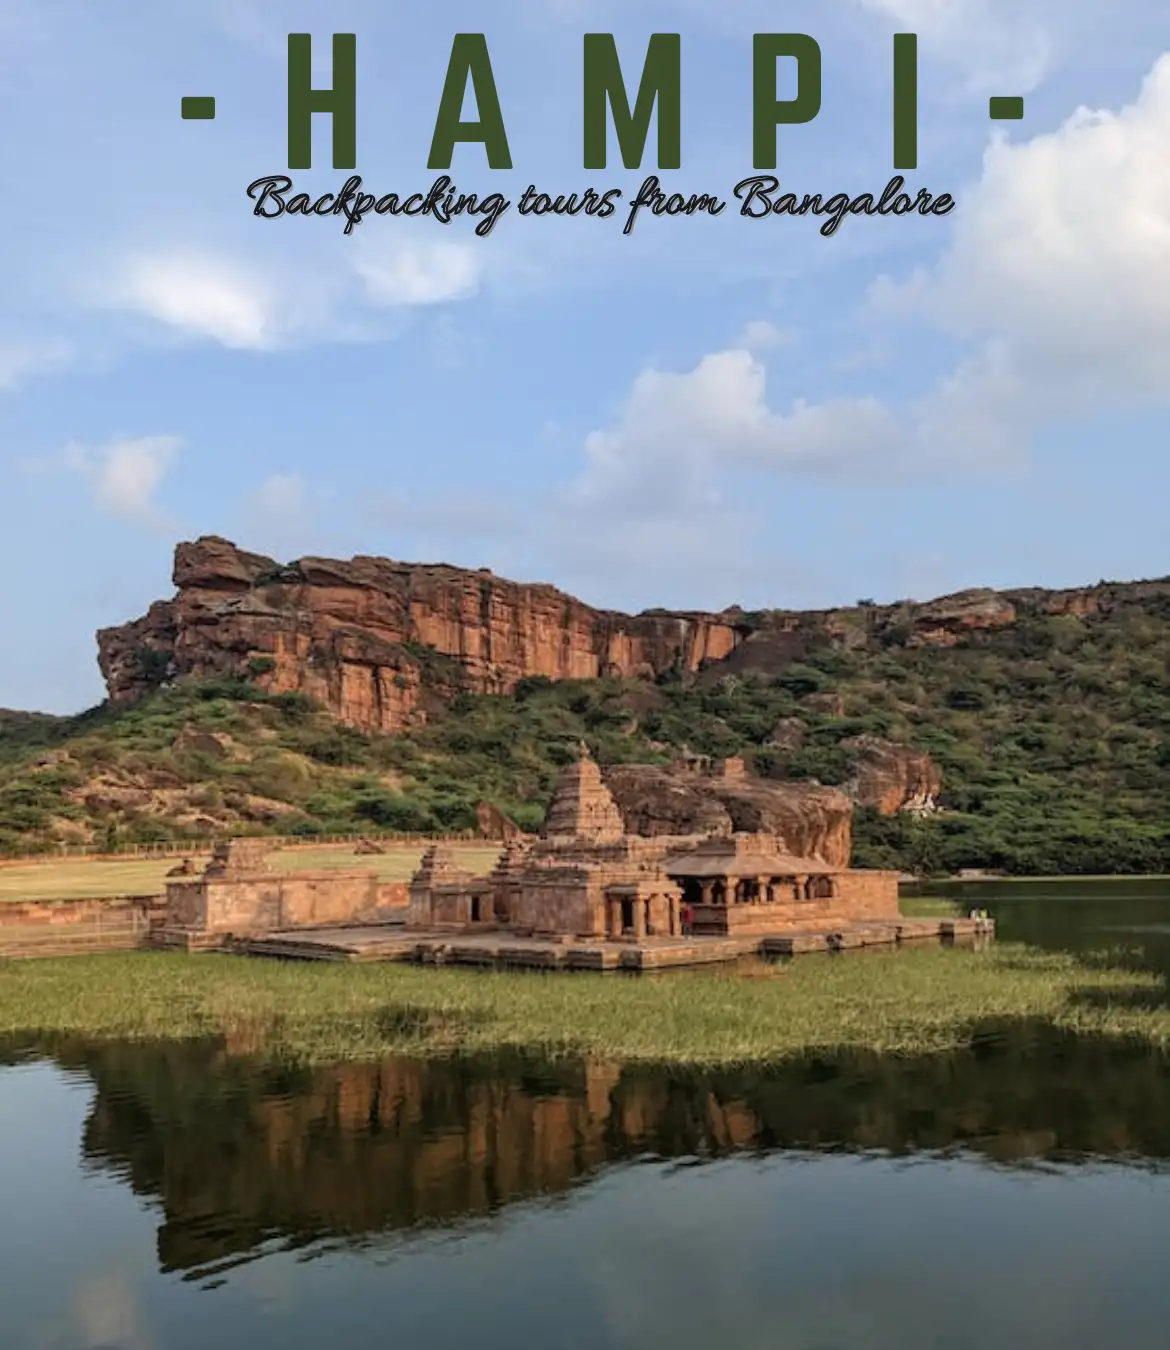 Hampi Backpacking Tours from Bangalore